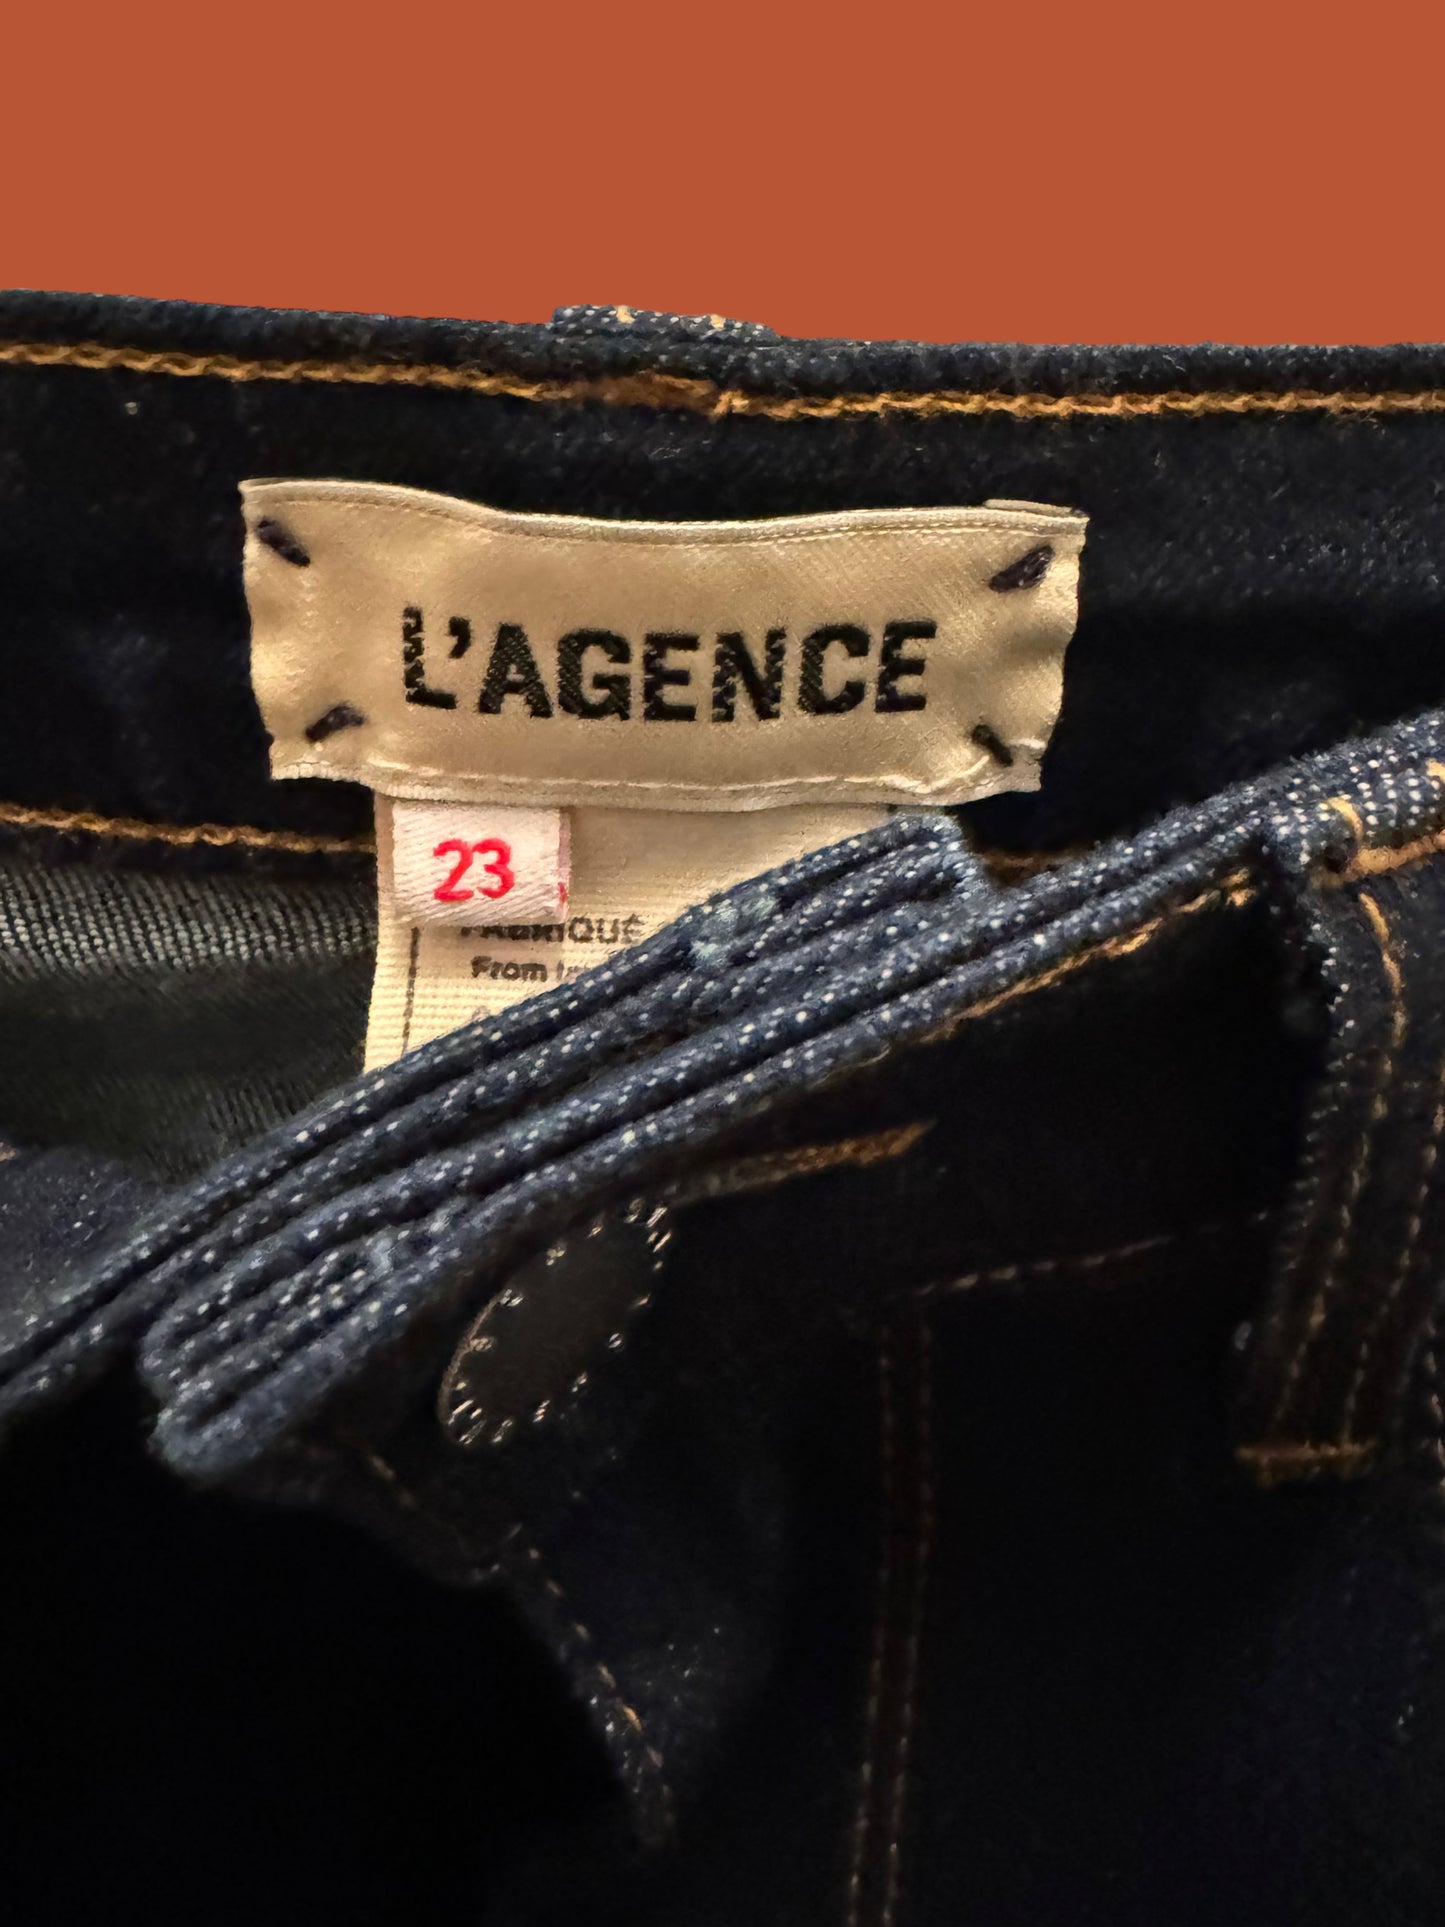 L’AGENCE bellbottom jeans size xs